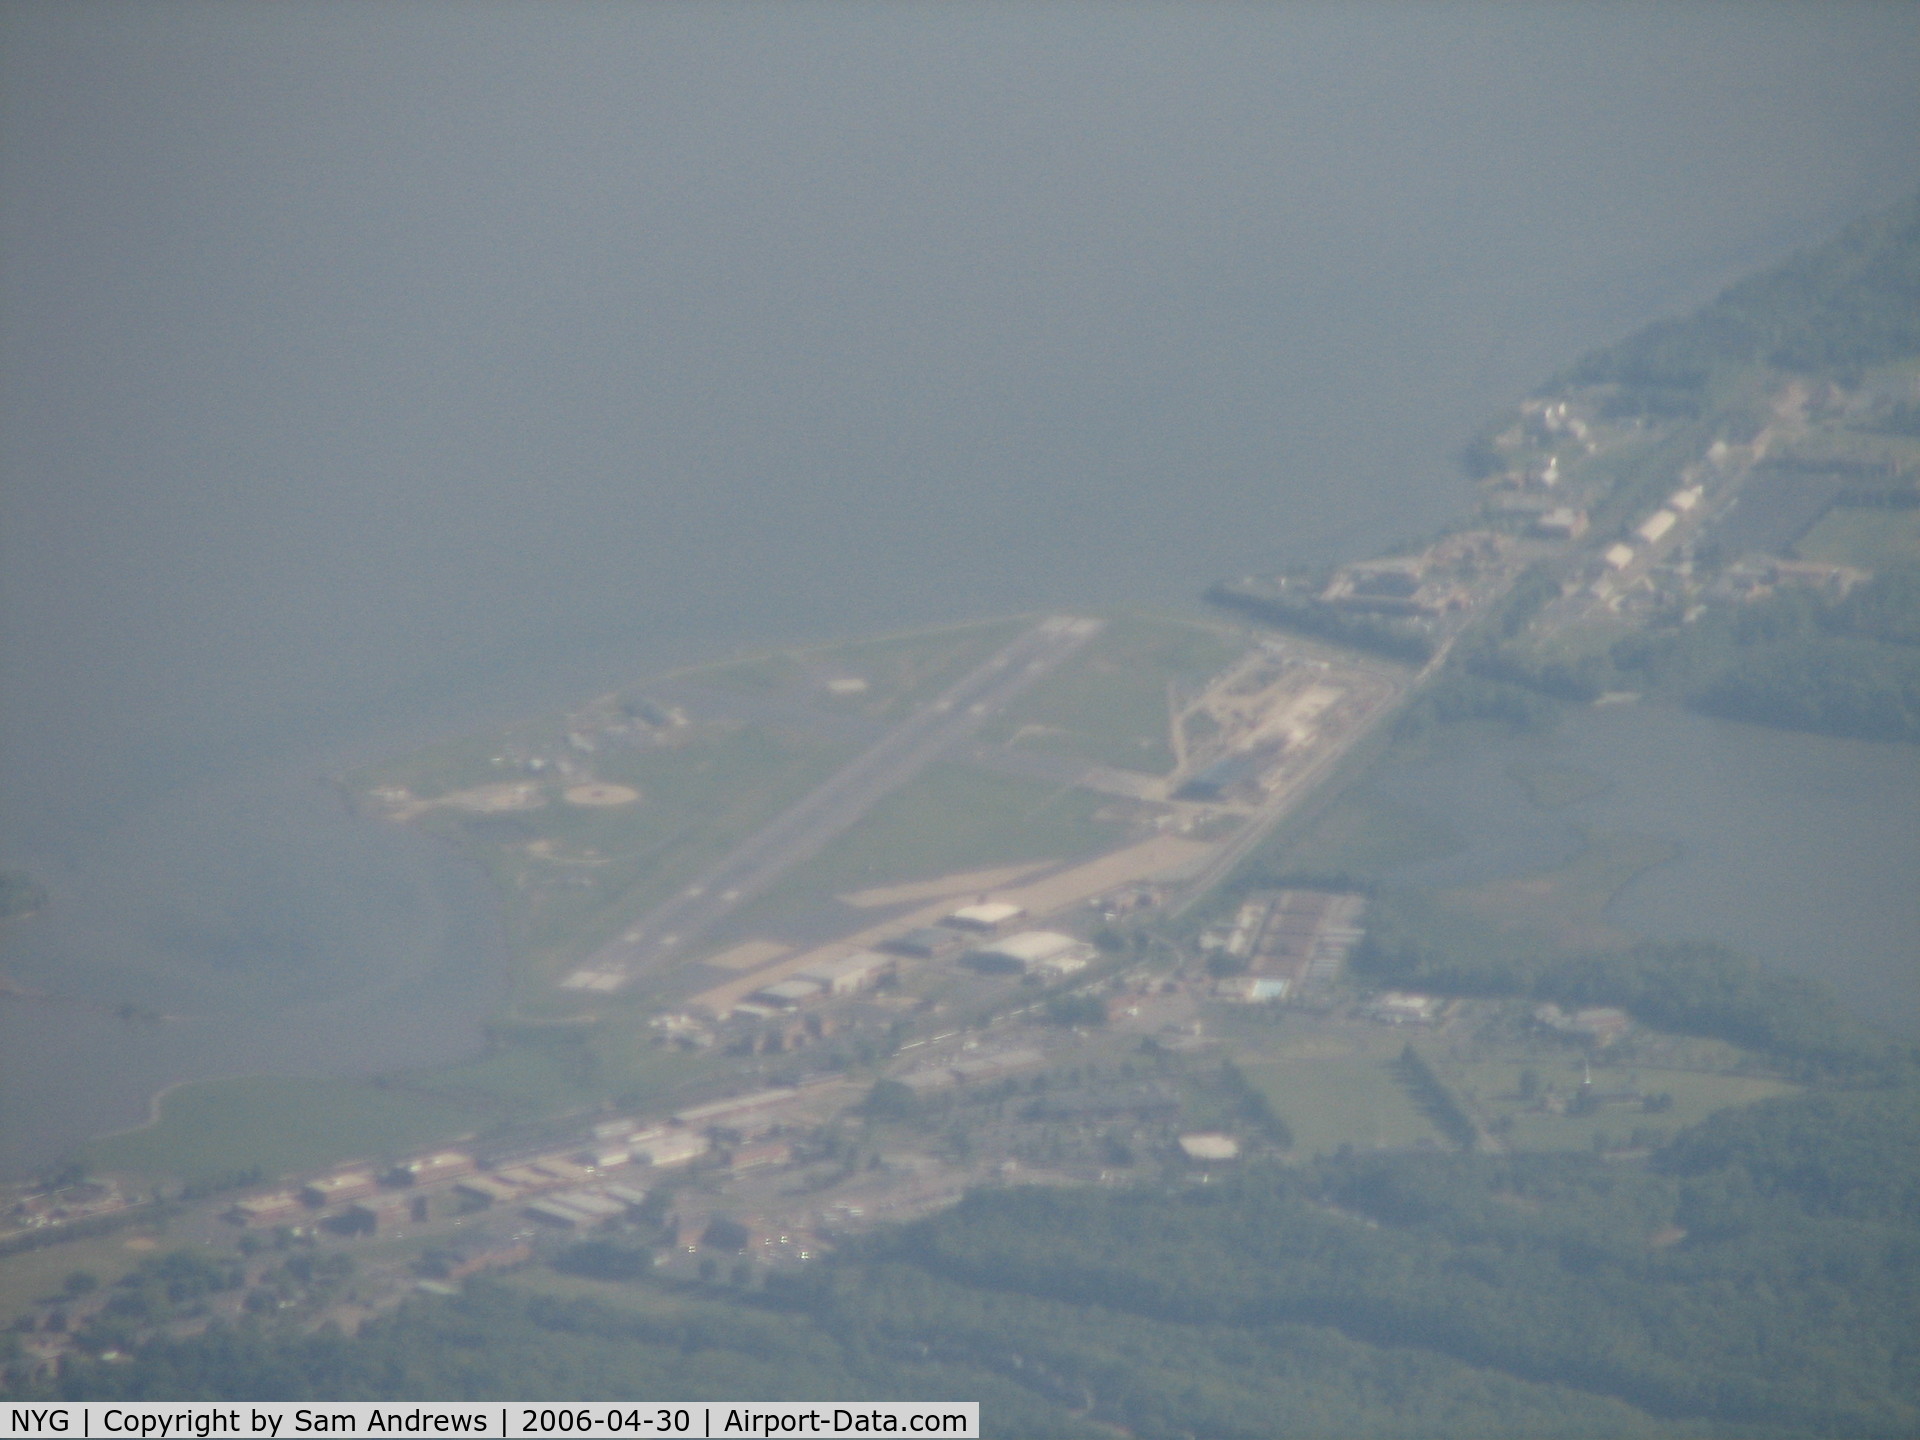 Quantico Mcaf /turner Field Airport (NYG) - Quantico MCAF